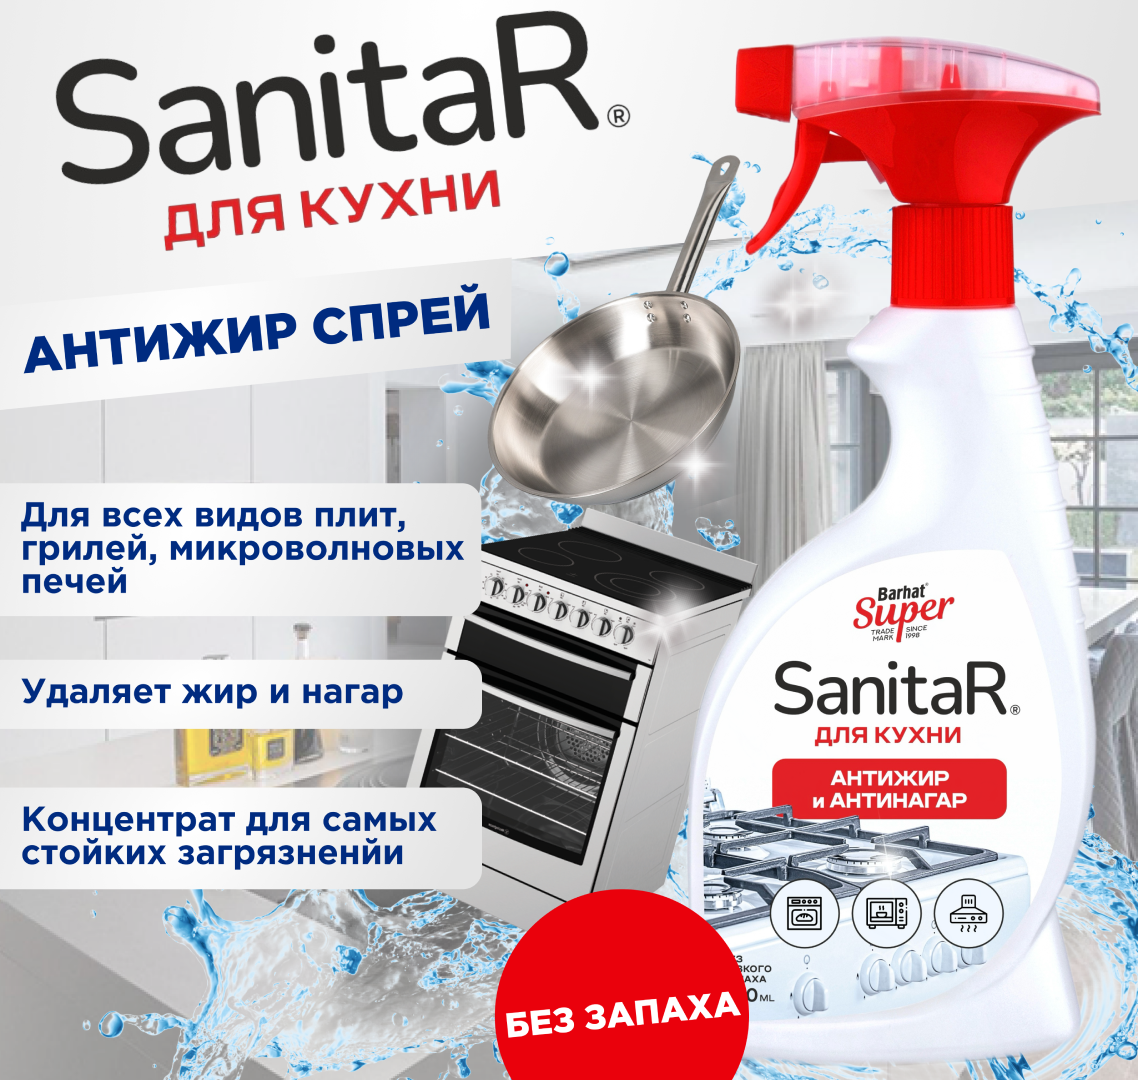 SUPER SANITAR spray (с курком)  АНТИЖИР 500 мл. лимон д/чист.плит, керамики,микр.печей. Грилей